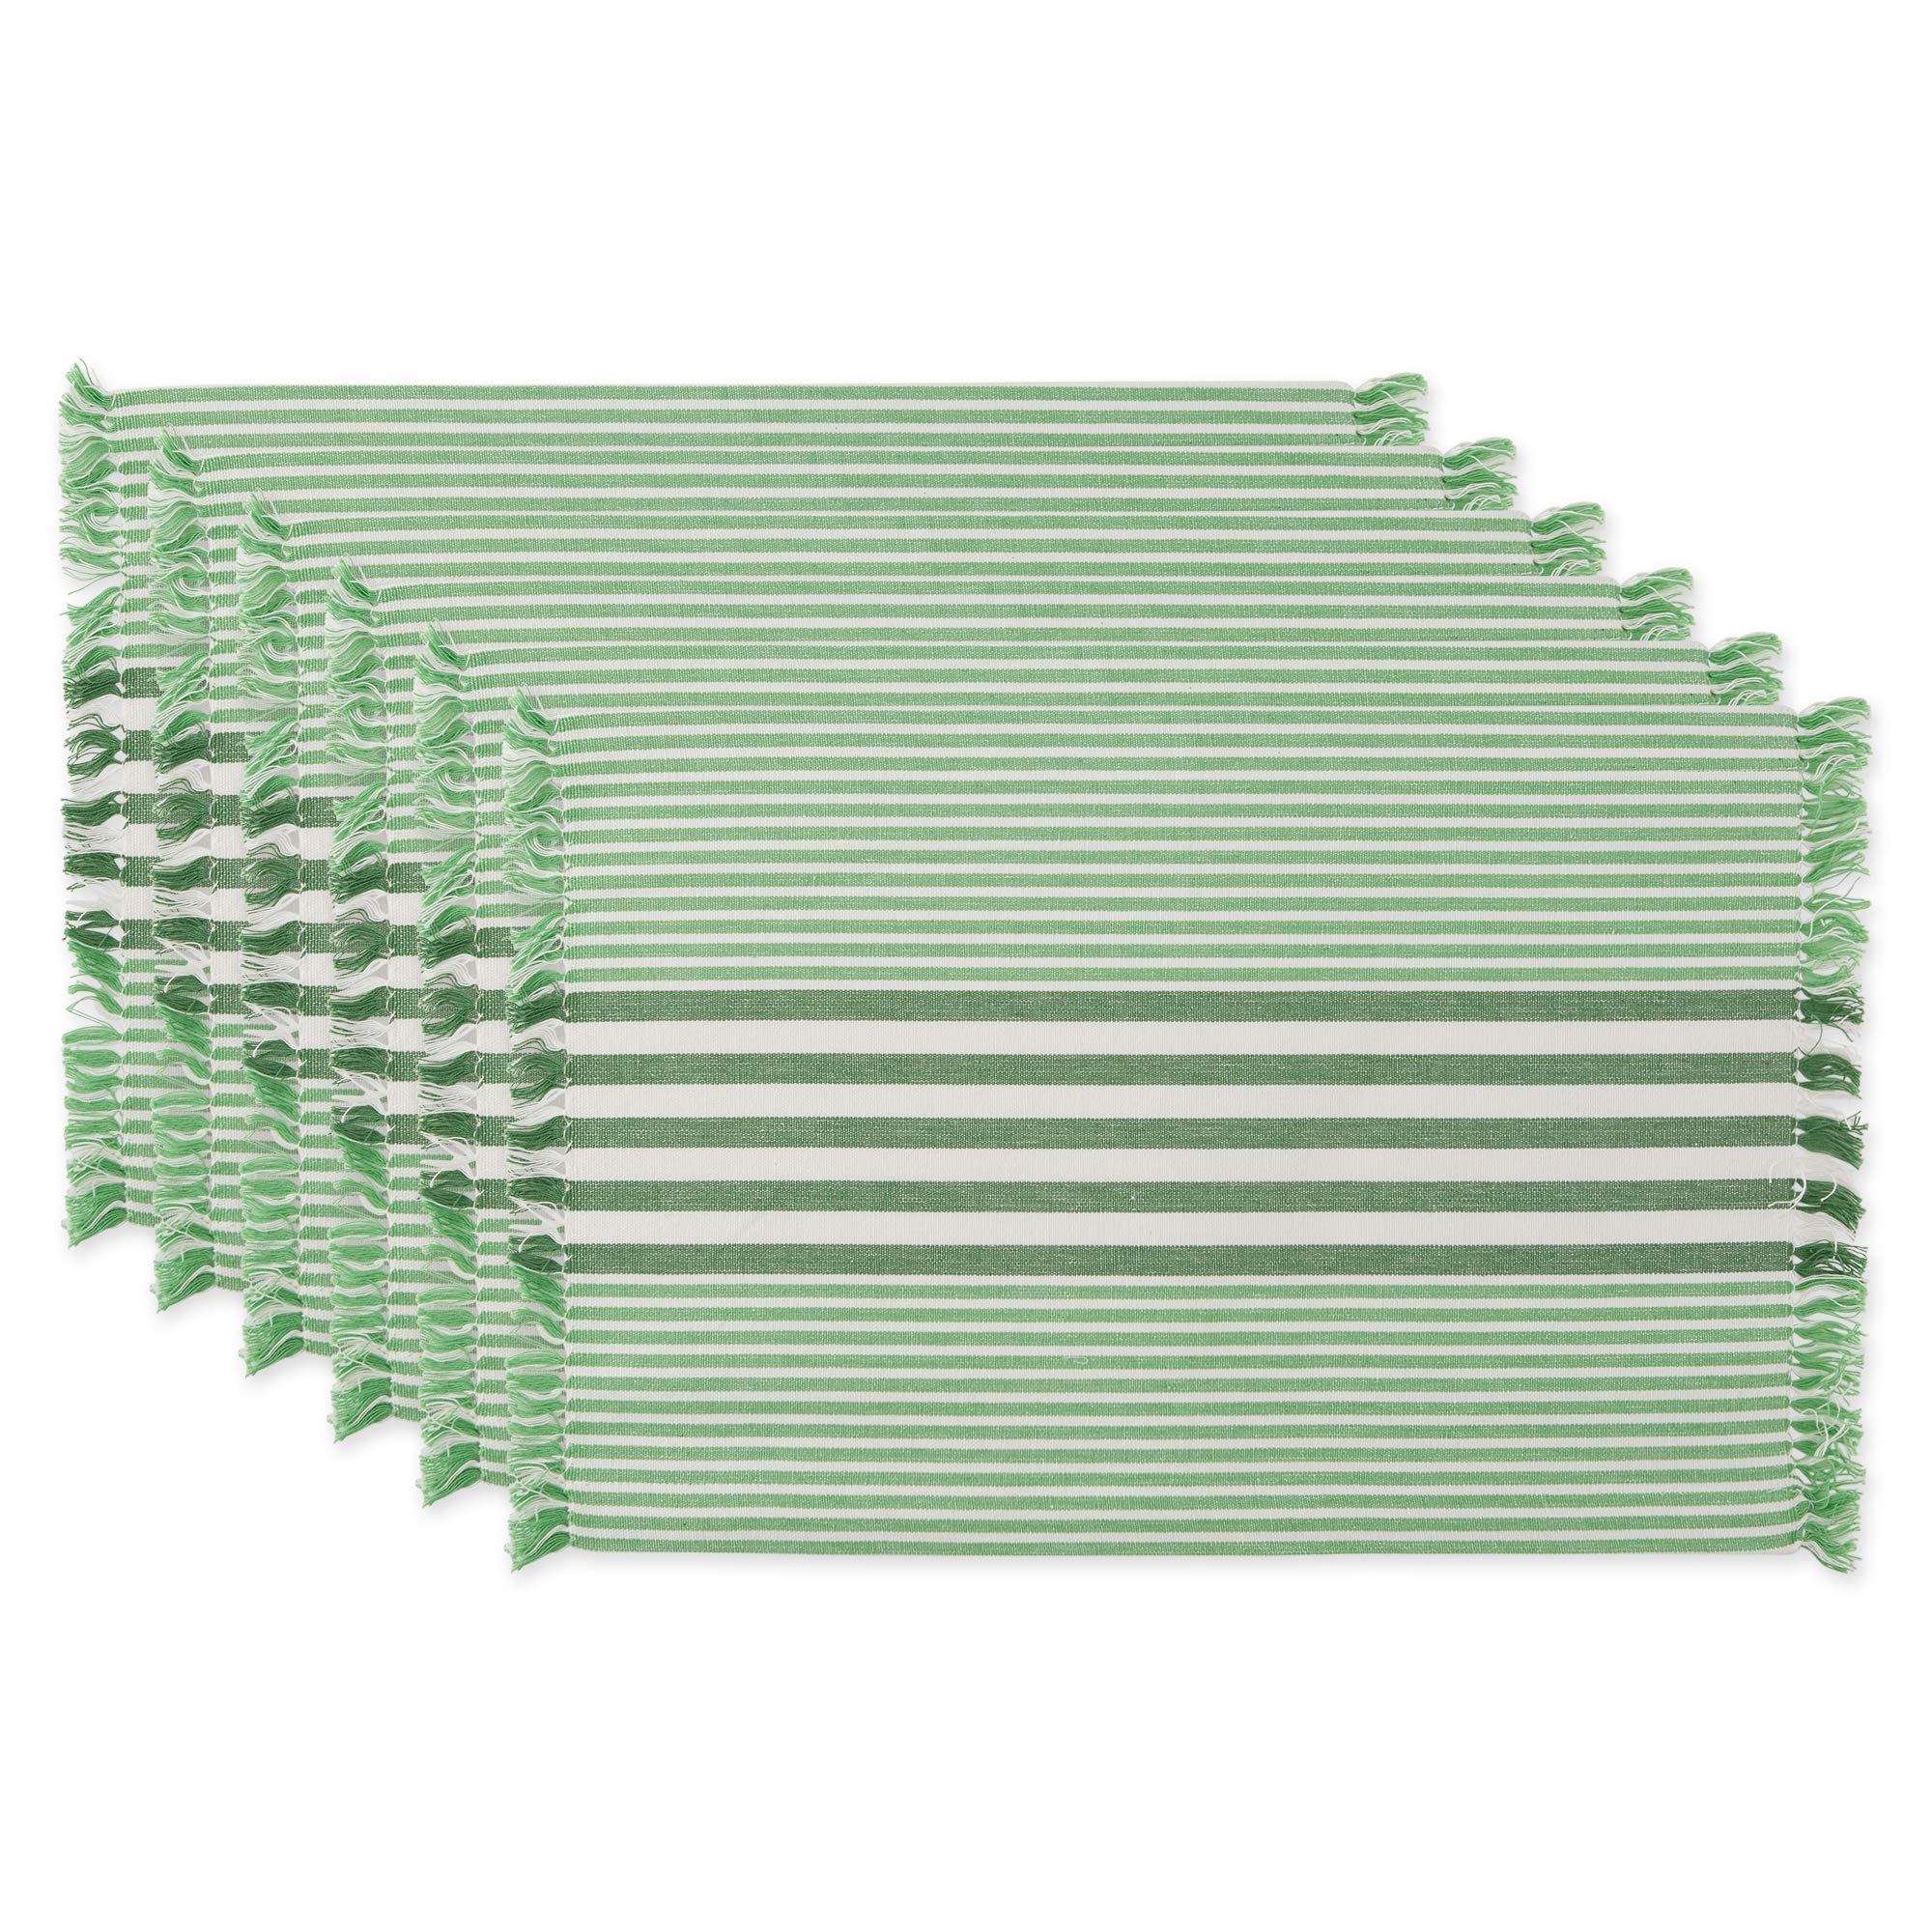 DII Multi Stripe Kitchen Tabletop Collection, Placemat Set, 13x19, Grass Green, 6 Piece Grass Green Placemat Set, 13x19"